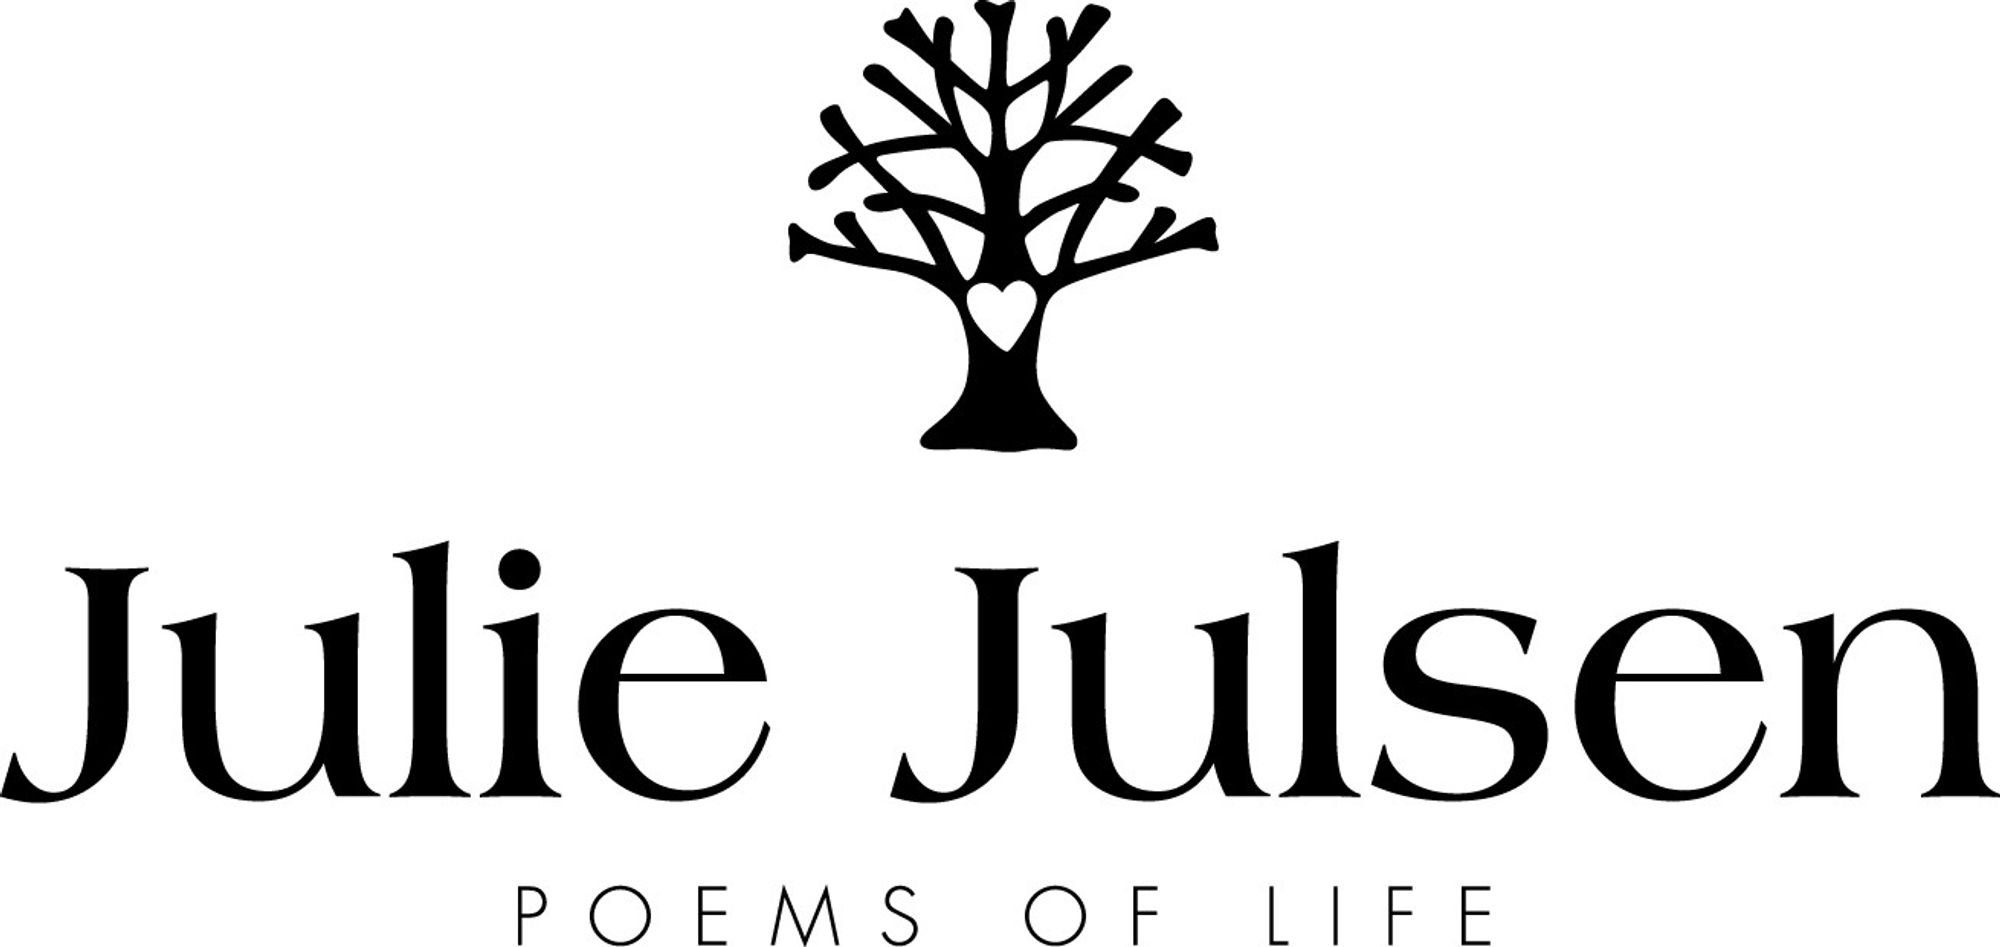 Julie Julsen Silberkette JJC080YG